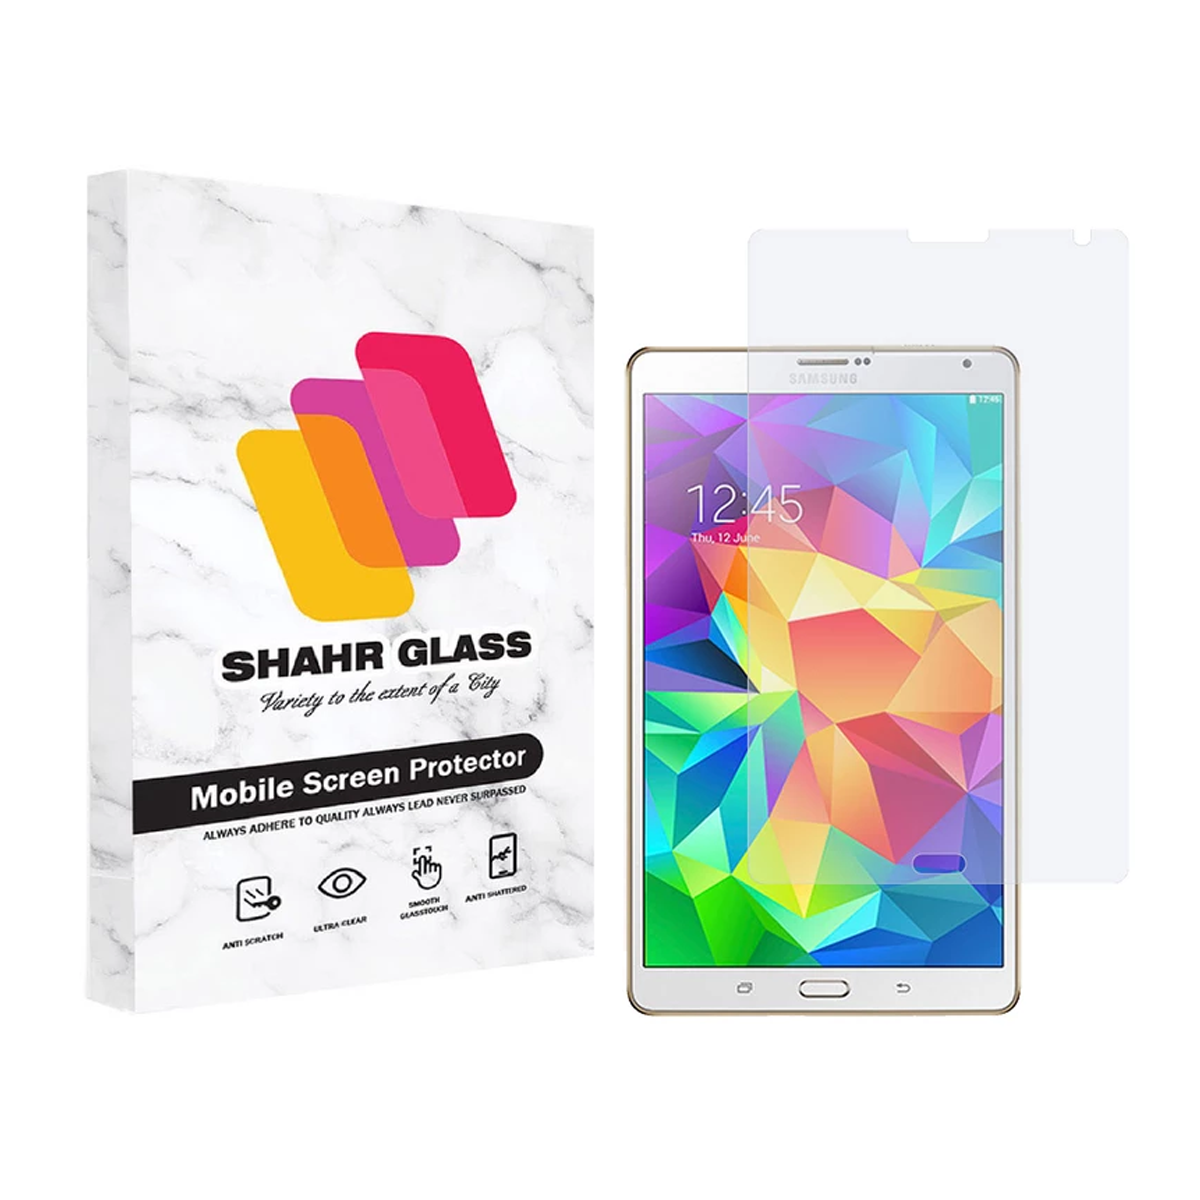 گلس تبلت سامسونگ Galaxy Tab S 8.4 شهر گلس مدل SMPT1 -بی رنگ شفاف